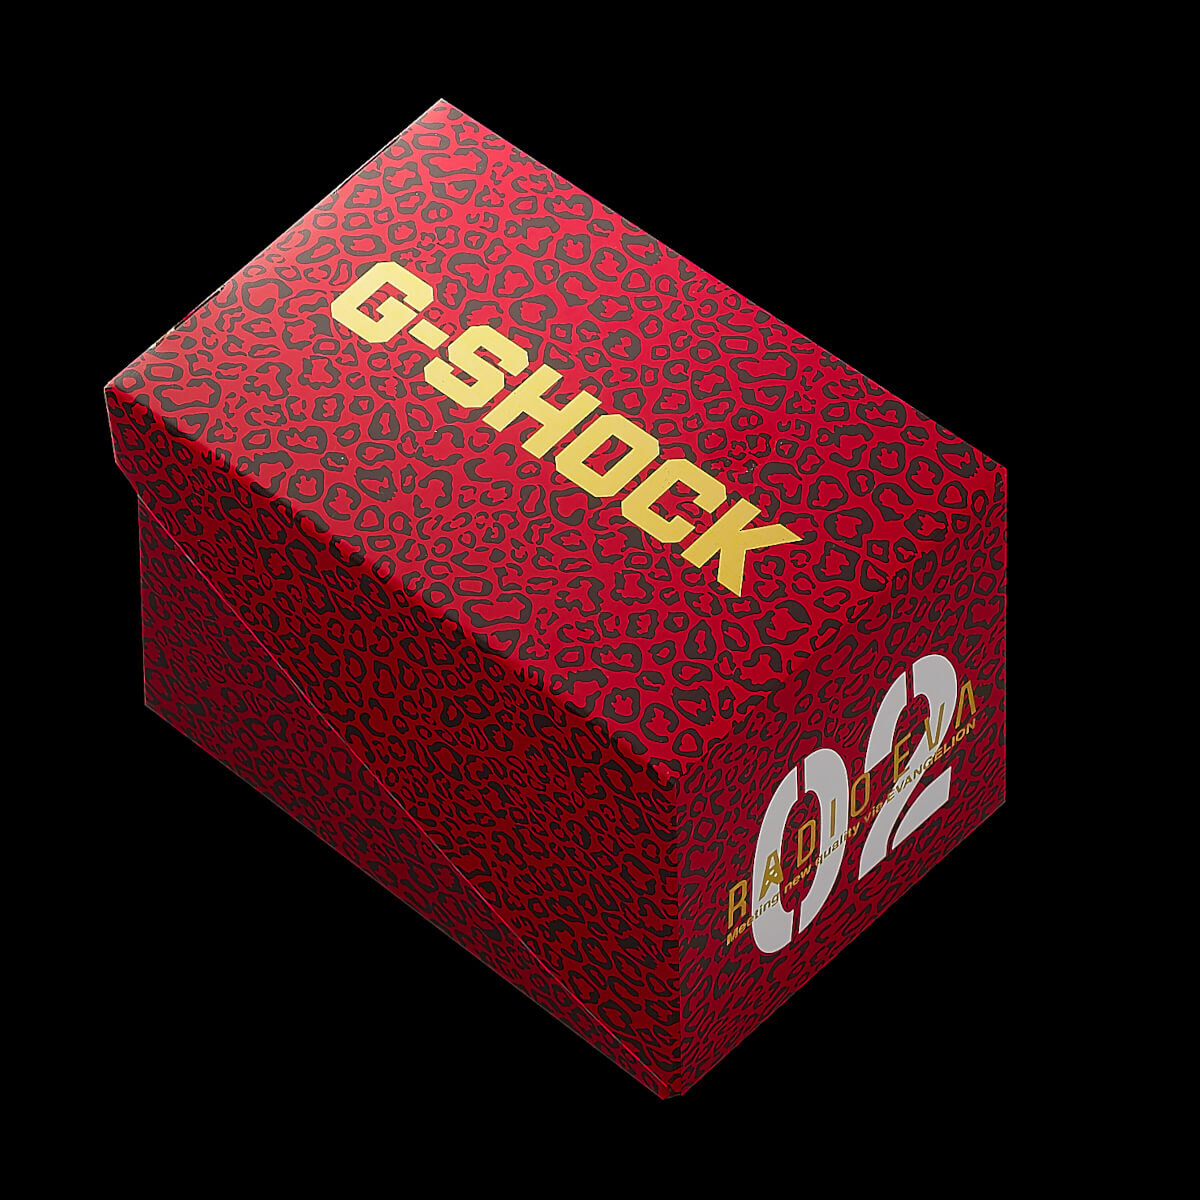 Evangelion x G-Shock DW-5600 EVA-02 The Beast Model